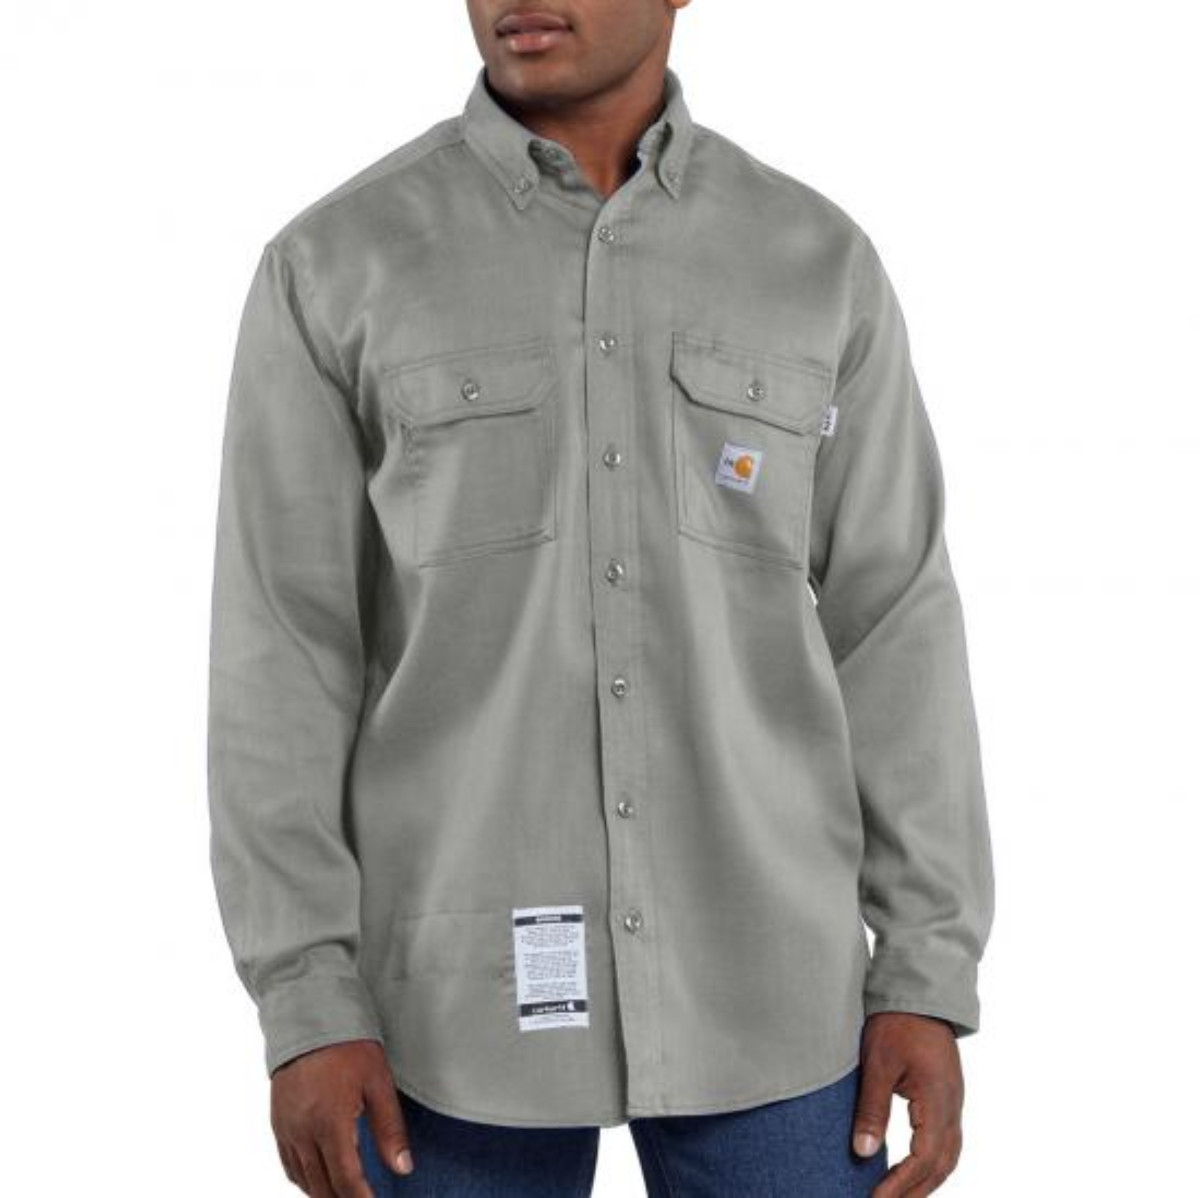 Carhartt Work-Dry Lightweight Twill Shirt in Gray